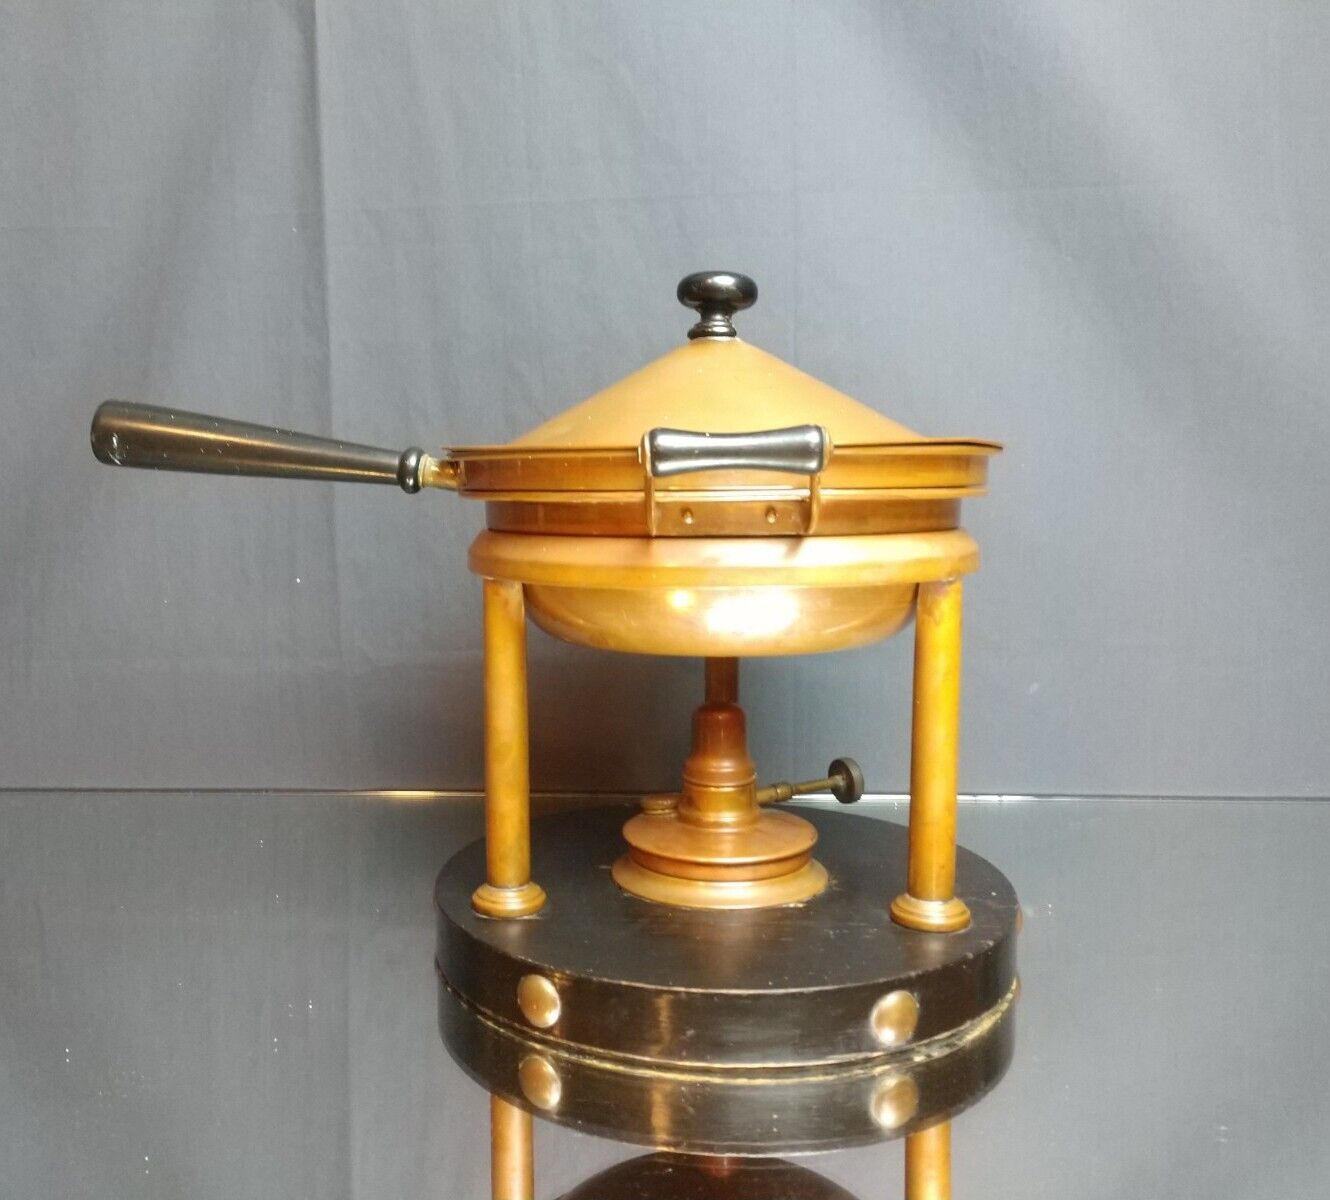 COMPLETE Antique Copper Chafing Dish S. Sternau NY Skillet Double Boiler BURNER